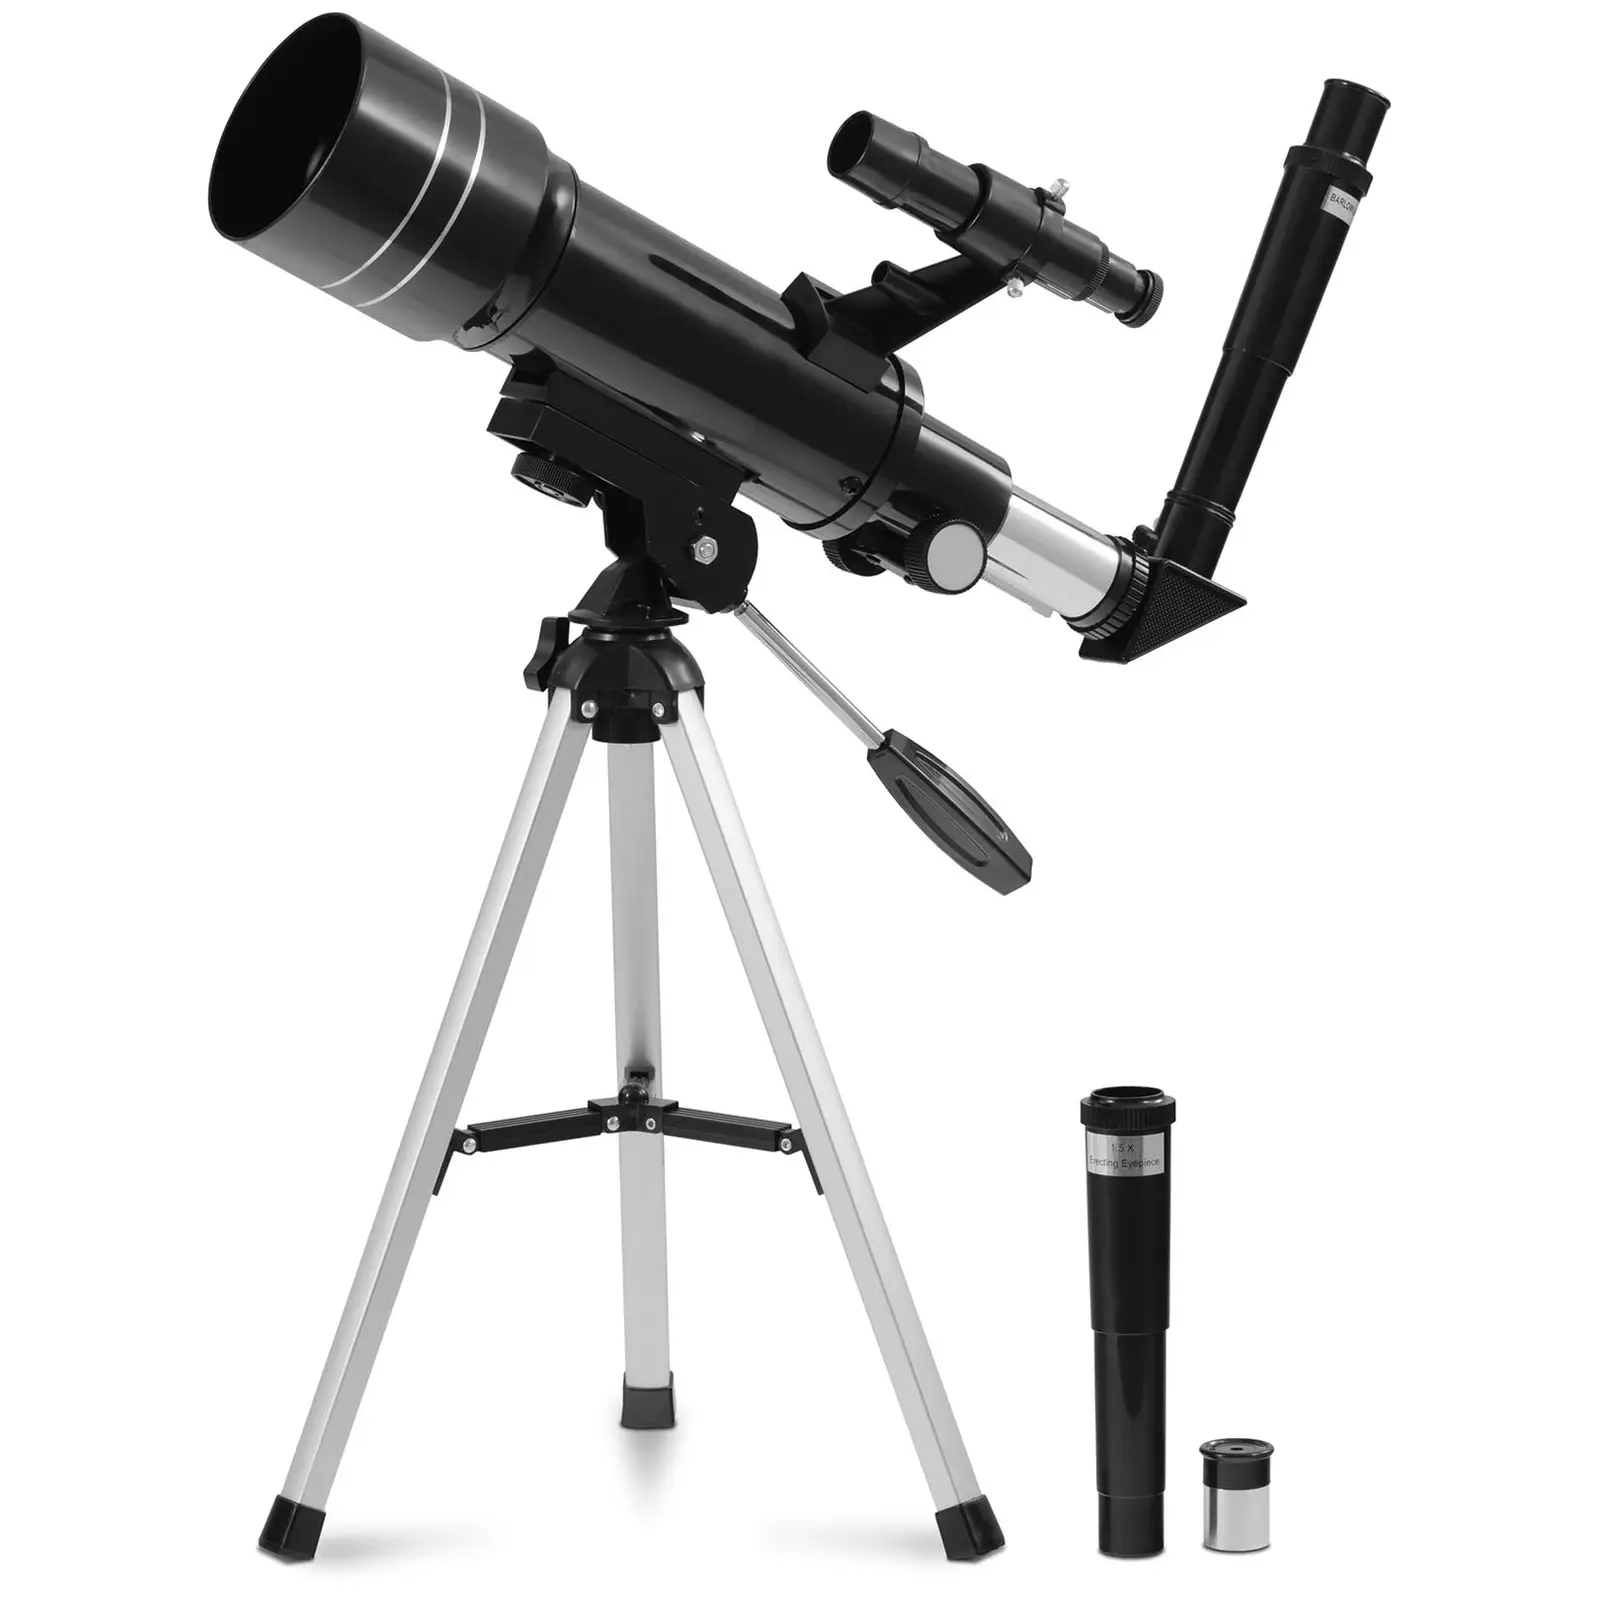 Teleskop refraktor - Ø69,78 mm - 360 mm - statyw